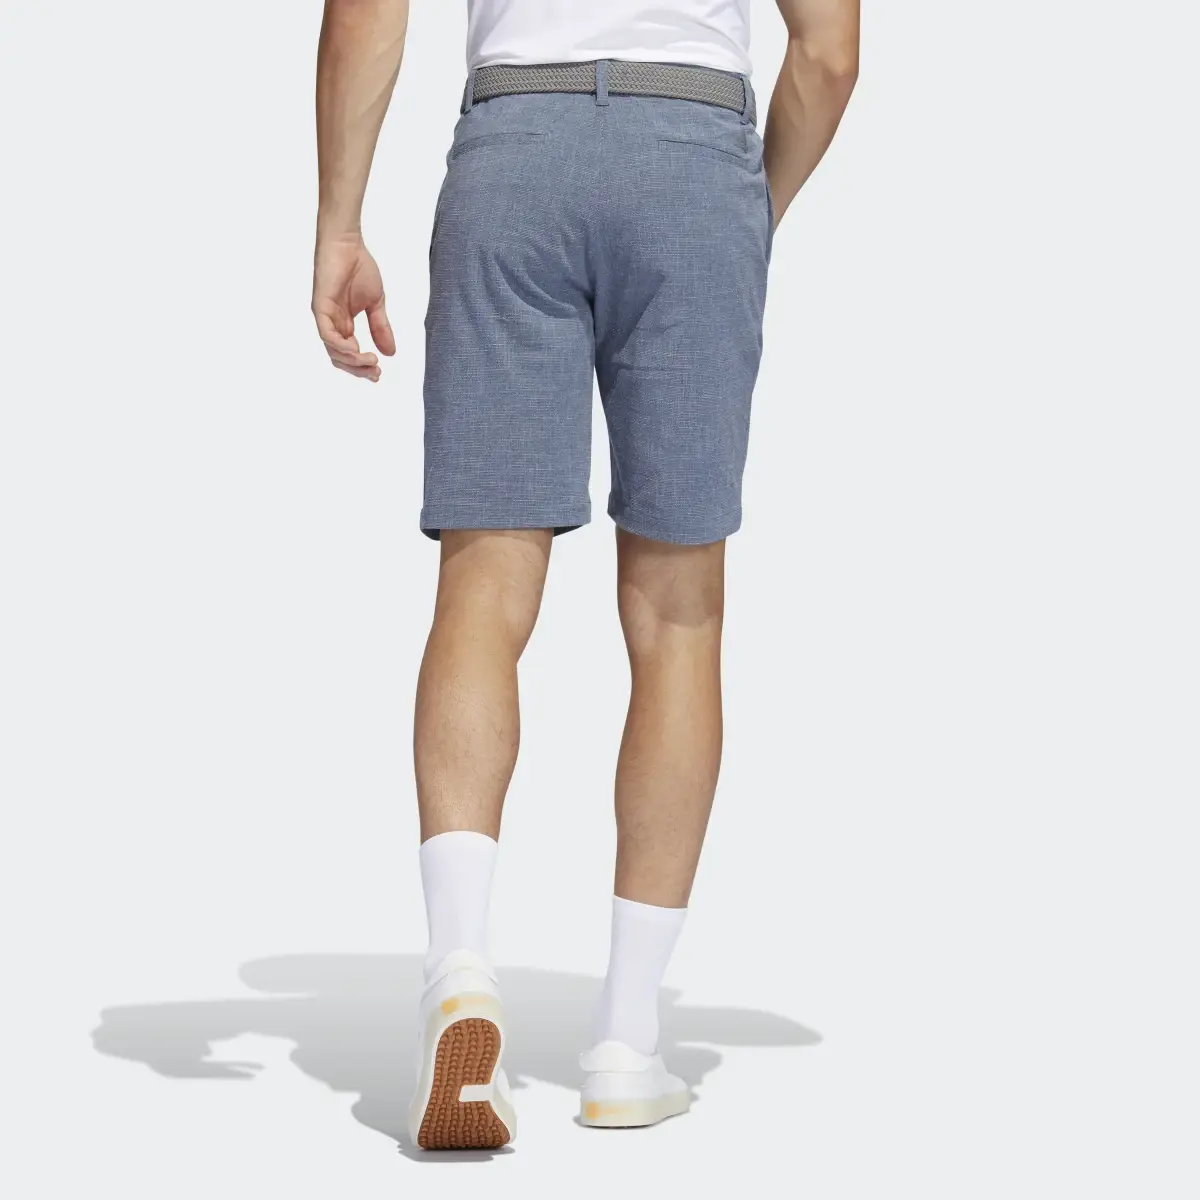 Adidas Crosshatch Shorts. 2